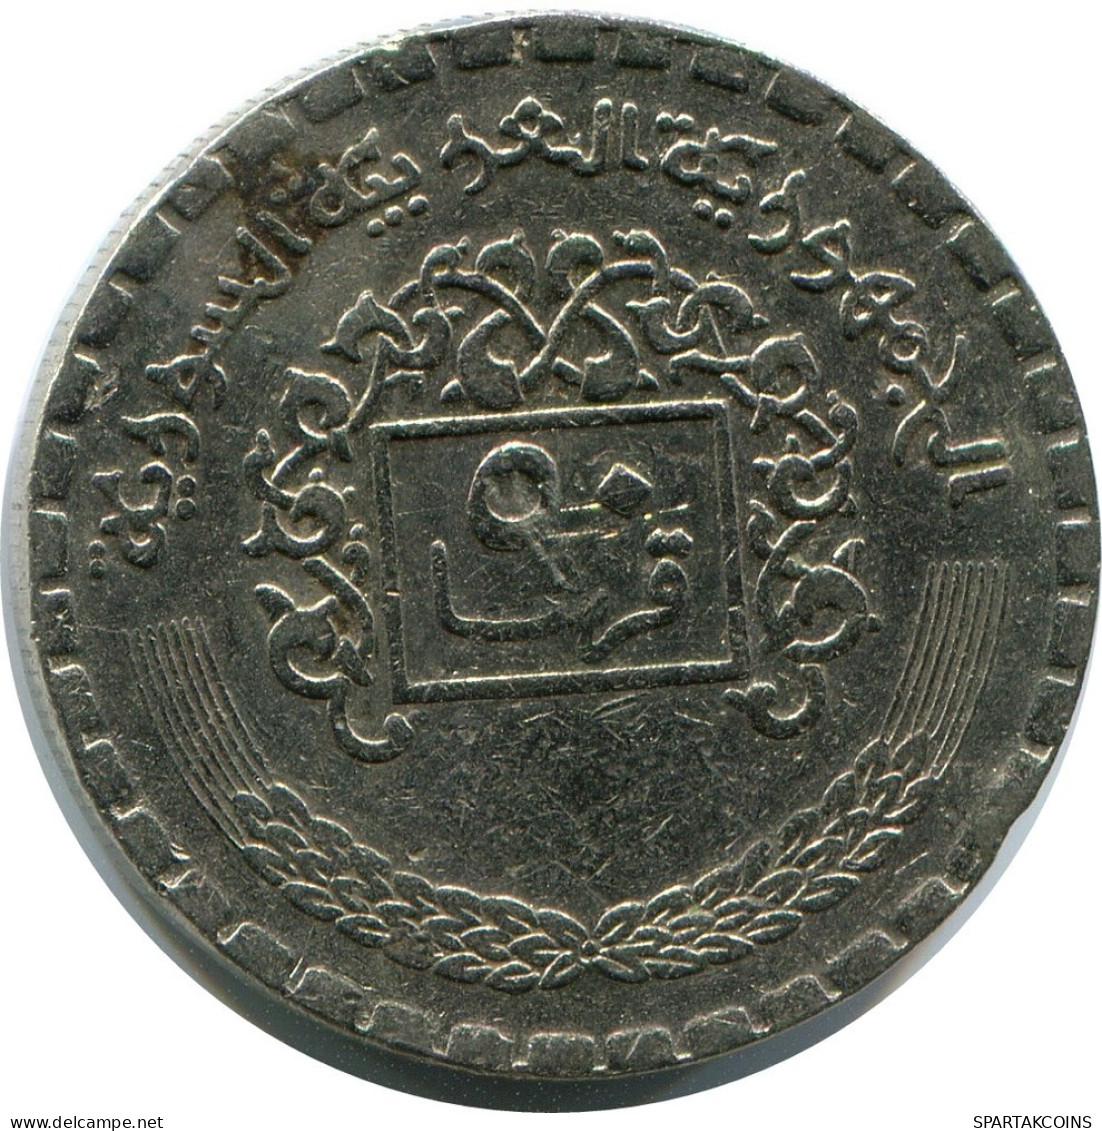 50 QIRSH 1974 SIRIA SYRIA Islámico Moneda #AZ219.E.A - Syrie